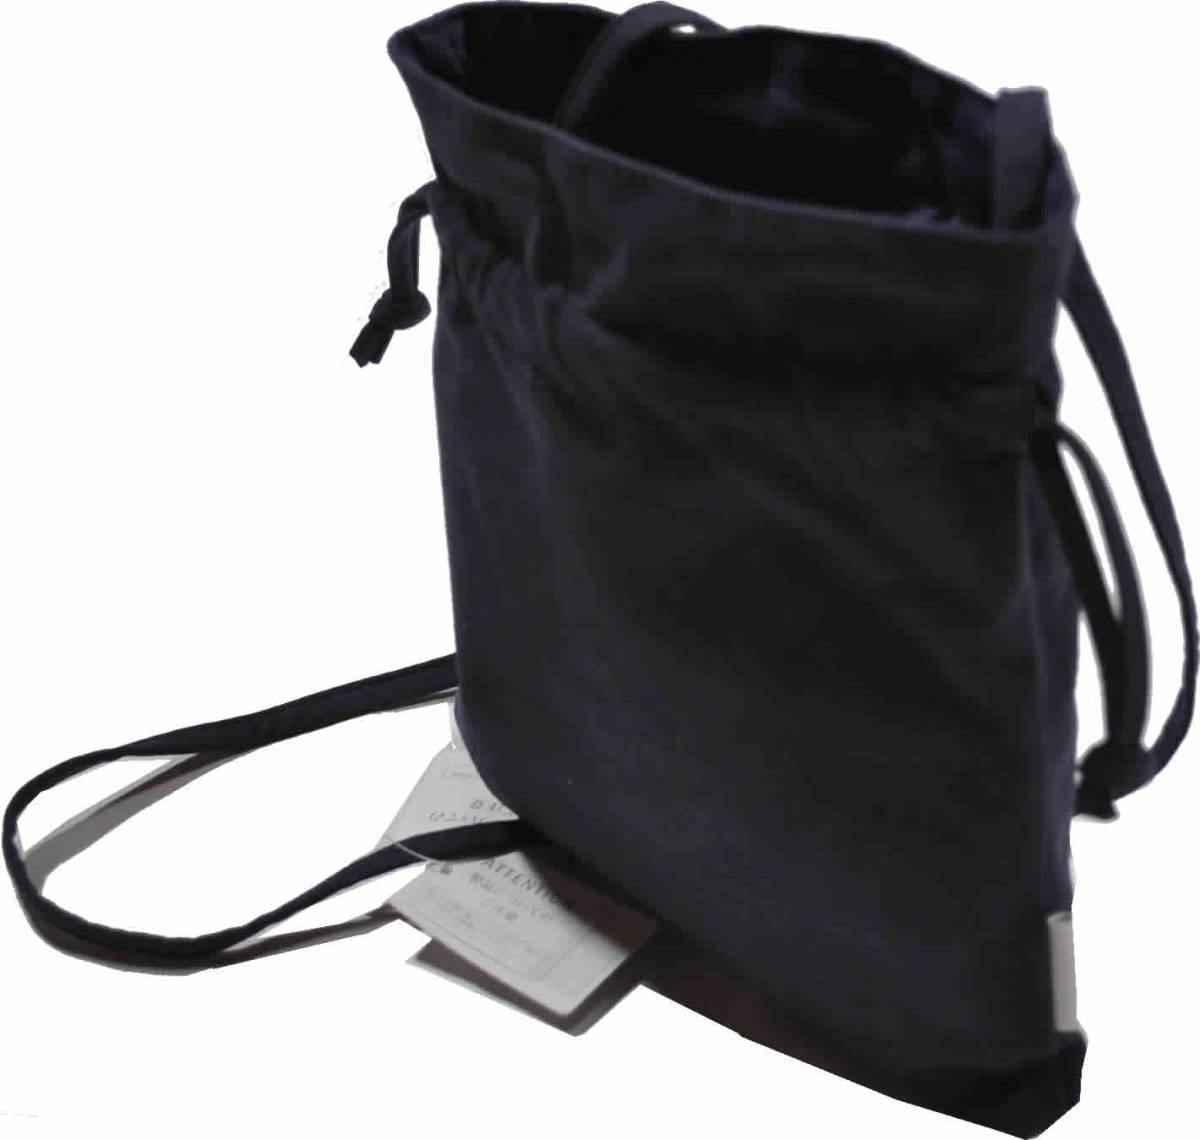  The shop tea ke- shoulder bag pouch synthetic leather navy blue 616-09316